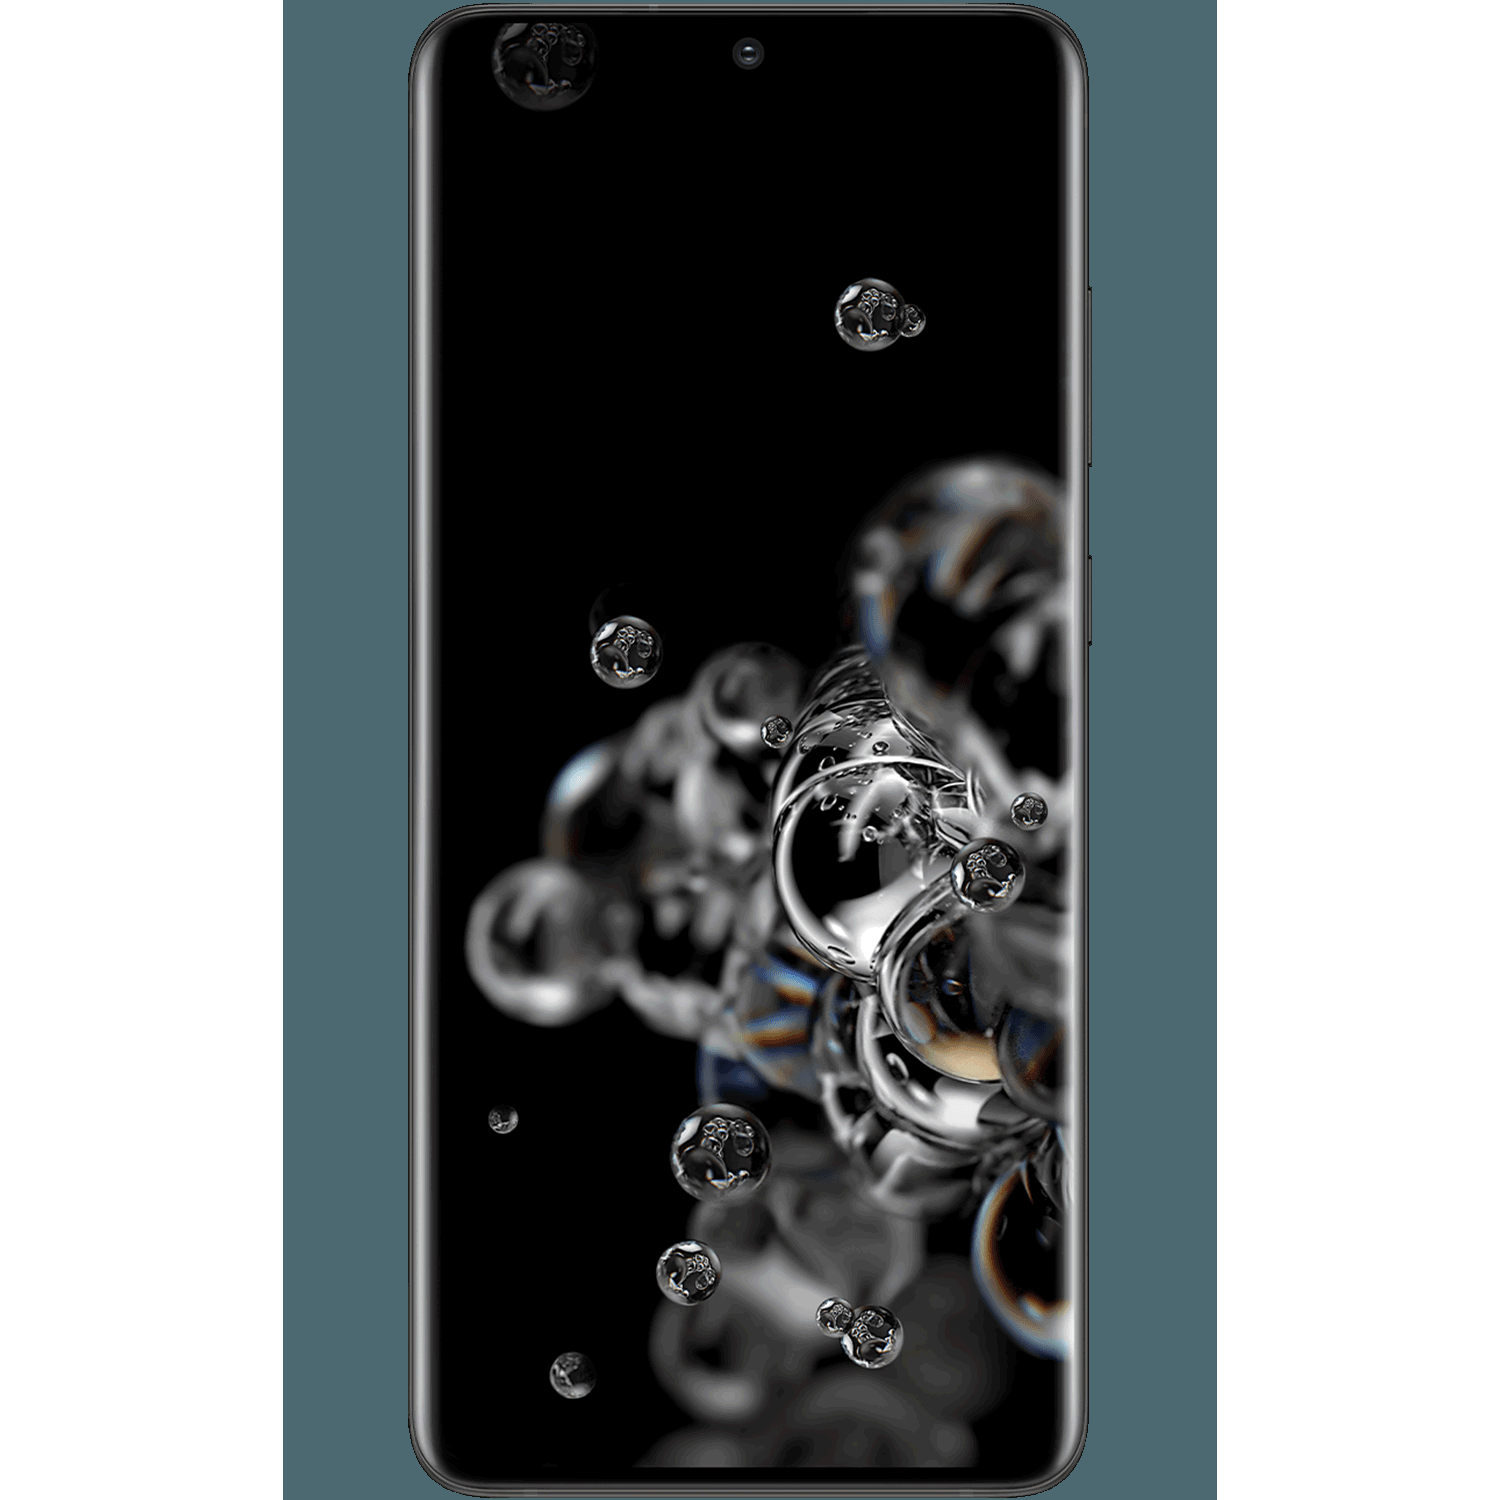 Samsung Galaxy S20 Ultra 5G 128GB Smartphone - Cosmic Black - Unlocked - Open Box